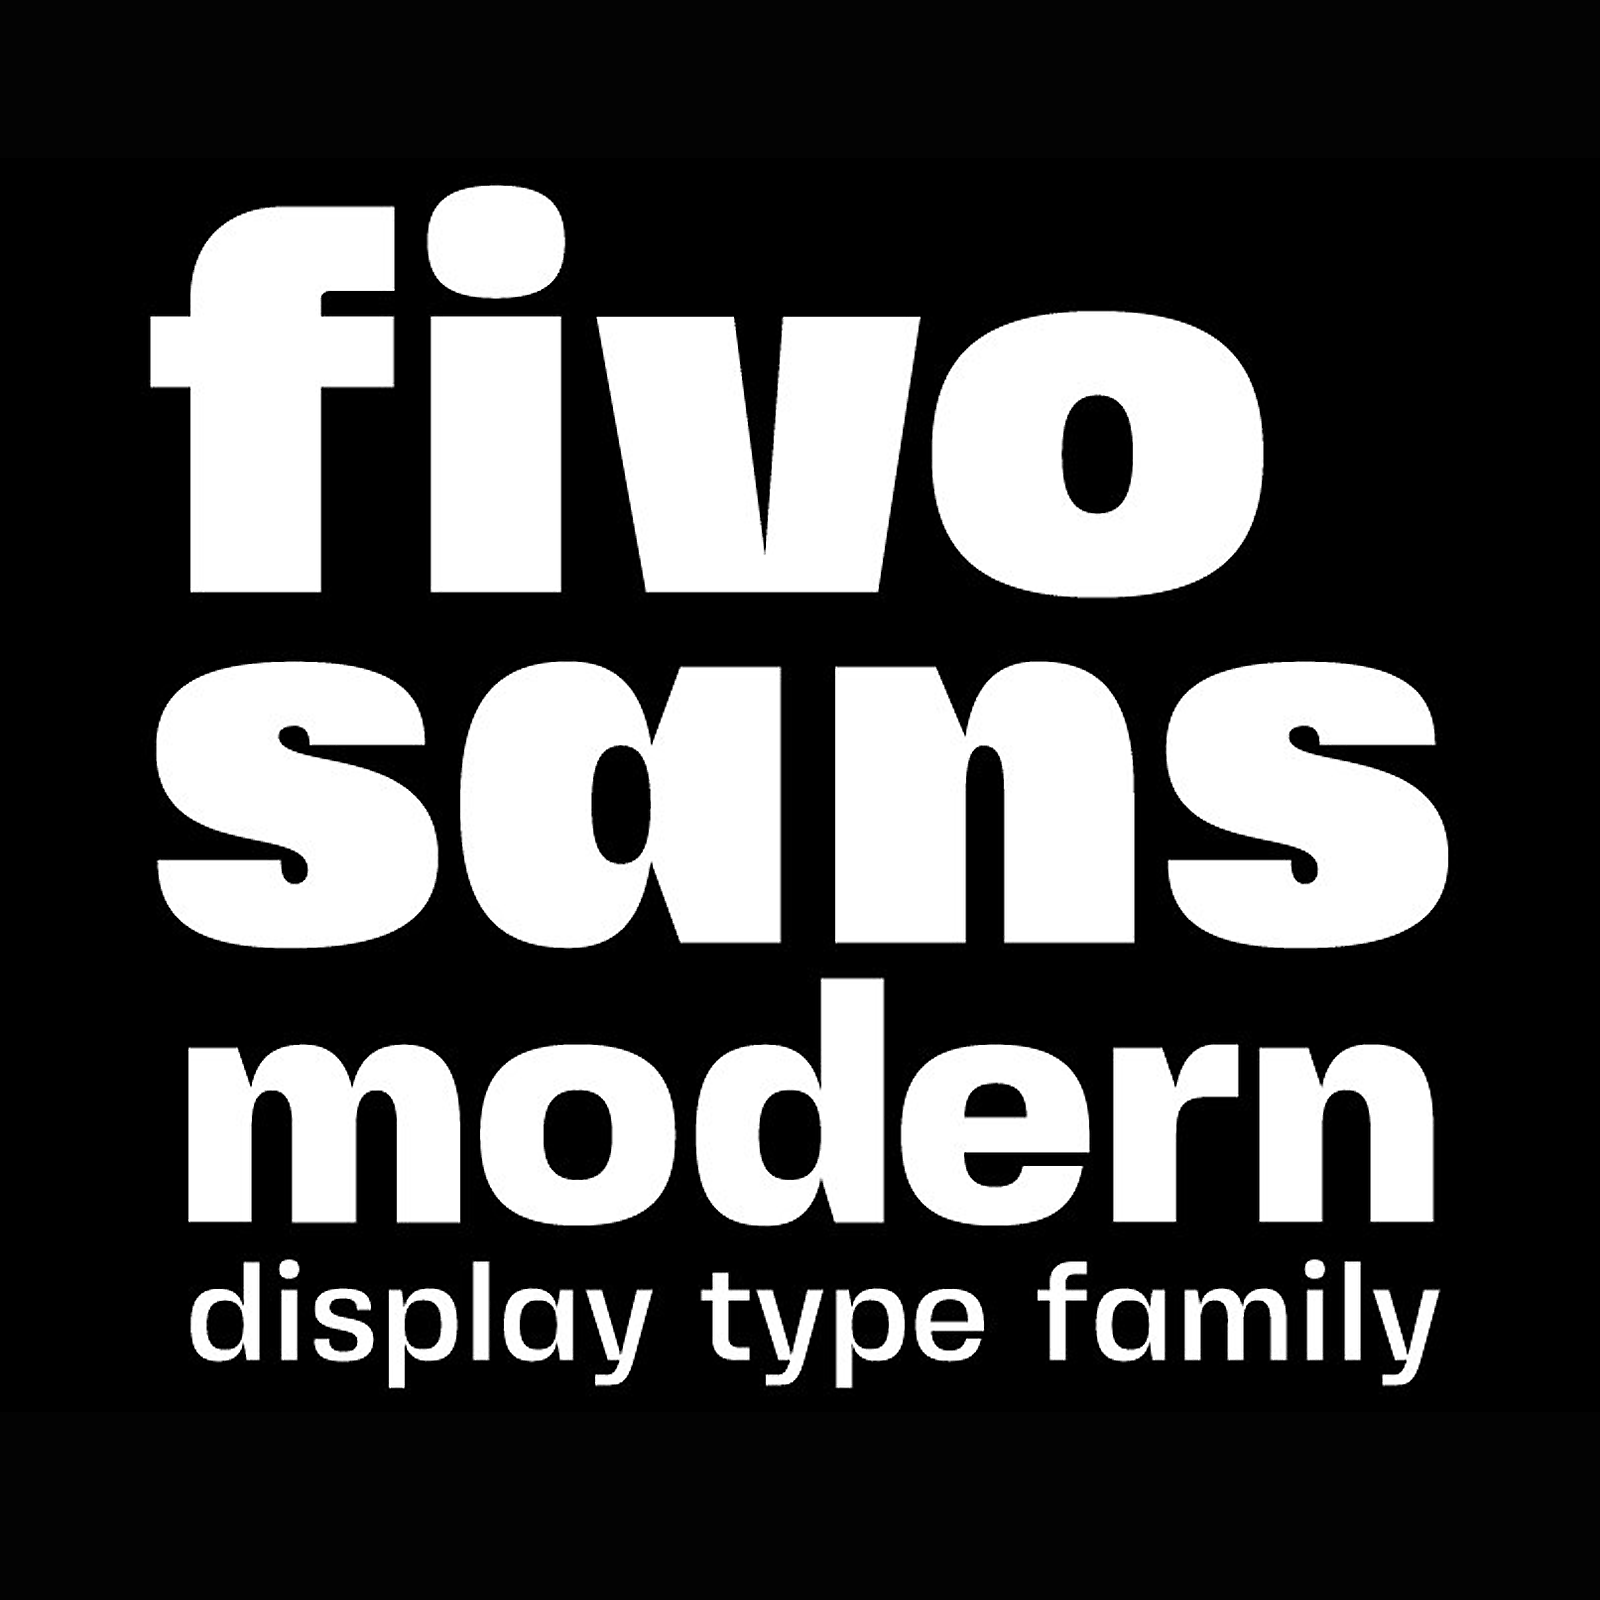 Пример шрифта Fivo Sans Modern #1